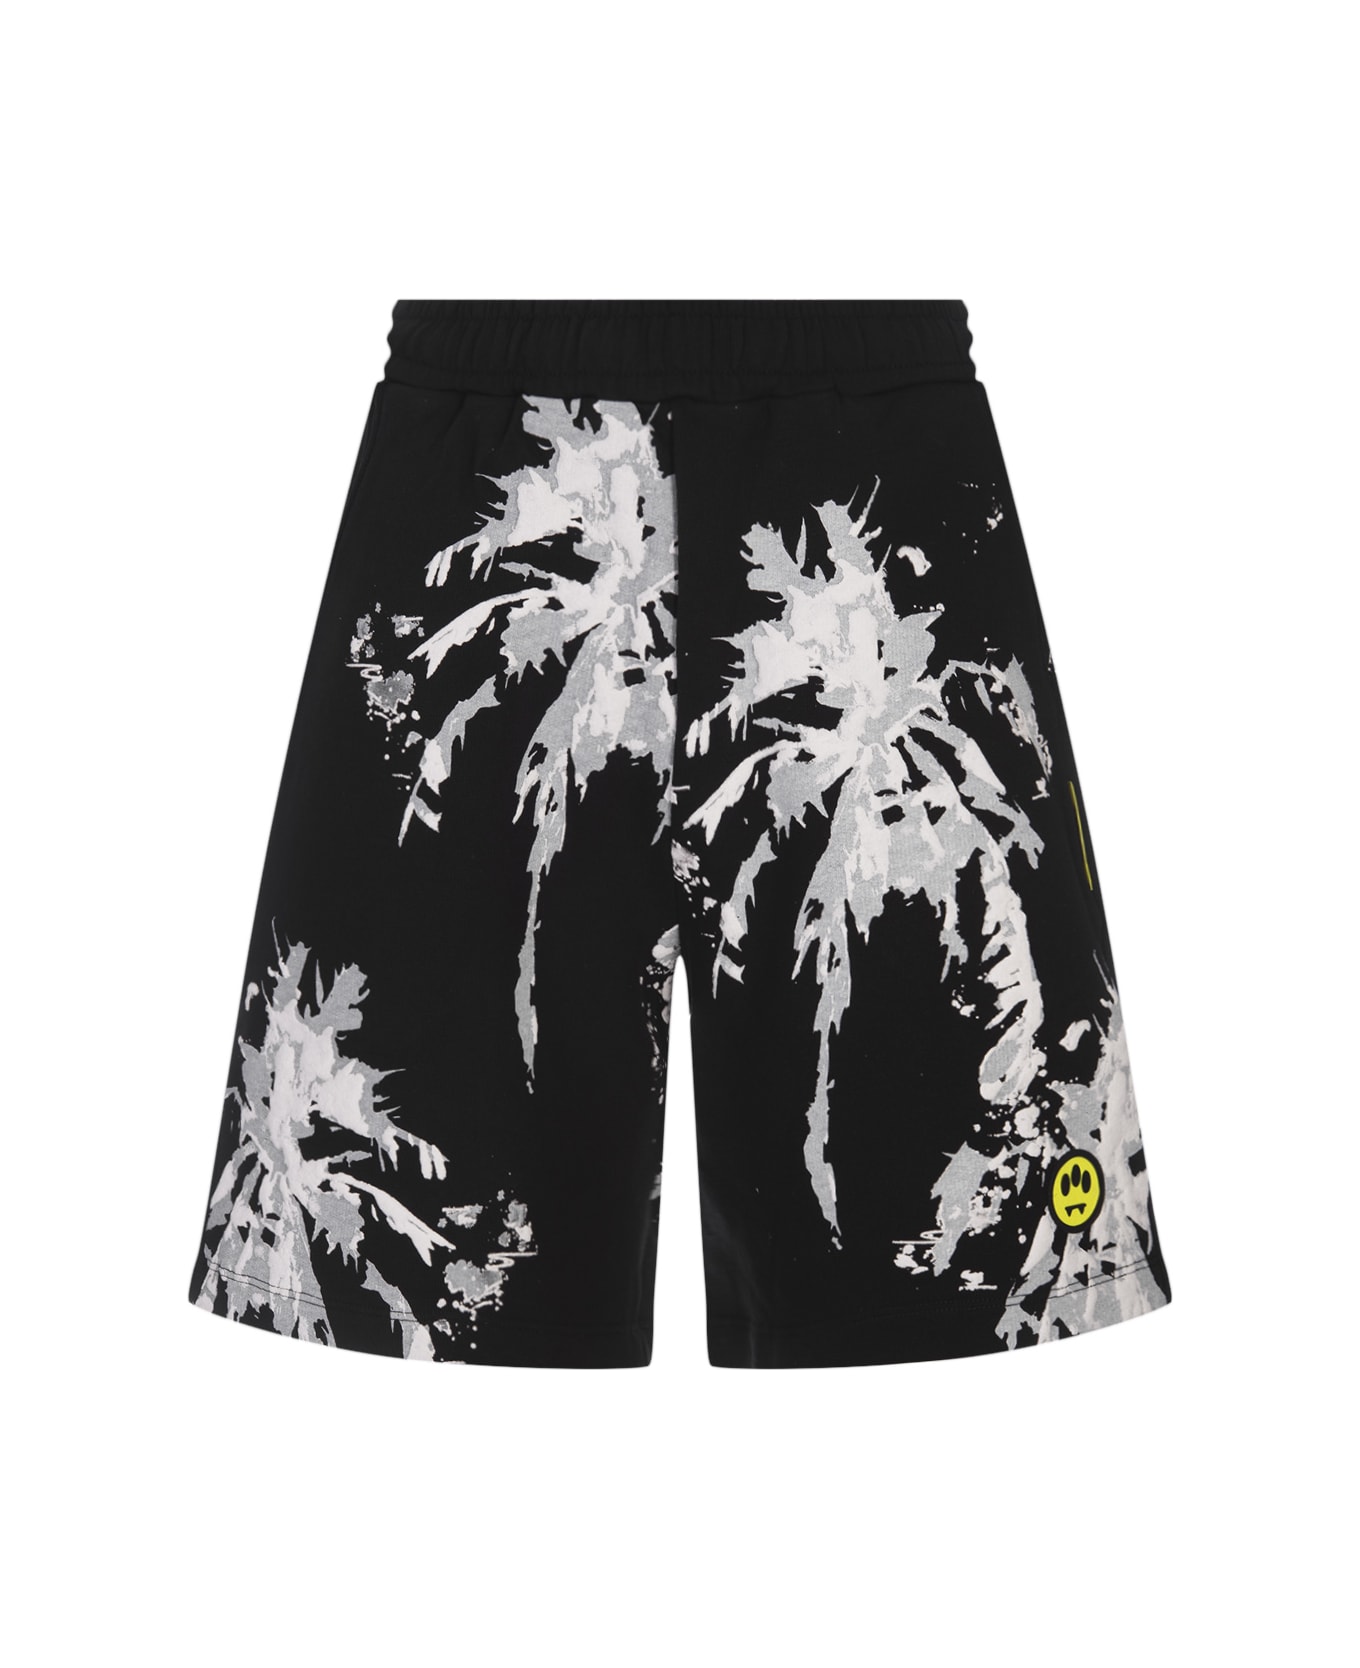 Barrow Black Shorts With Palms Graphic Print - Black